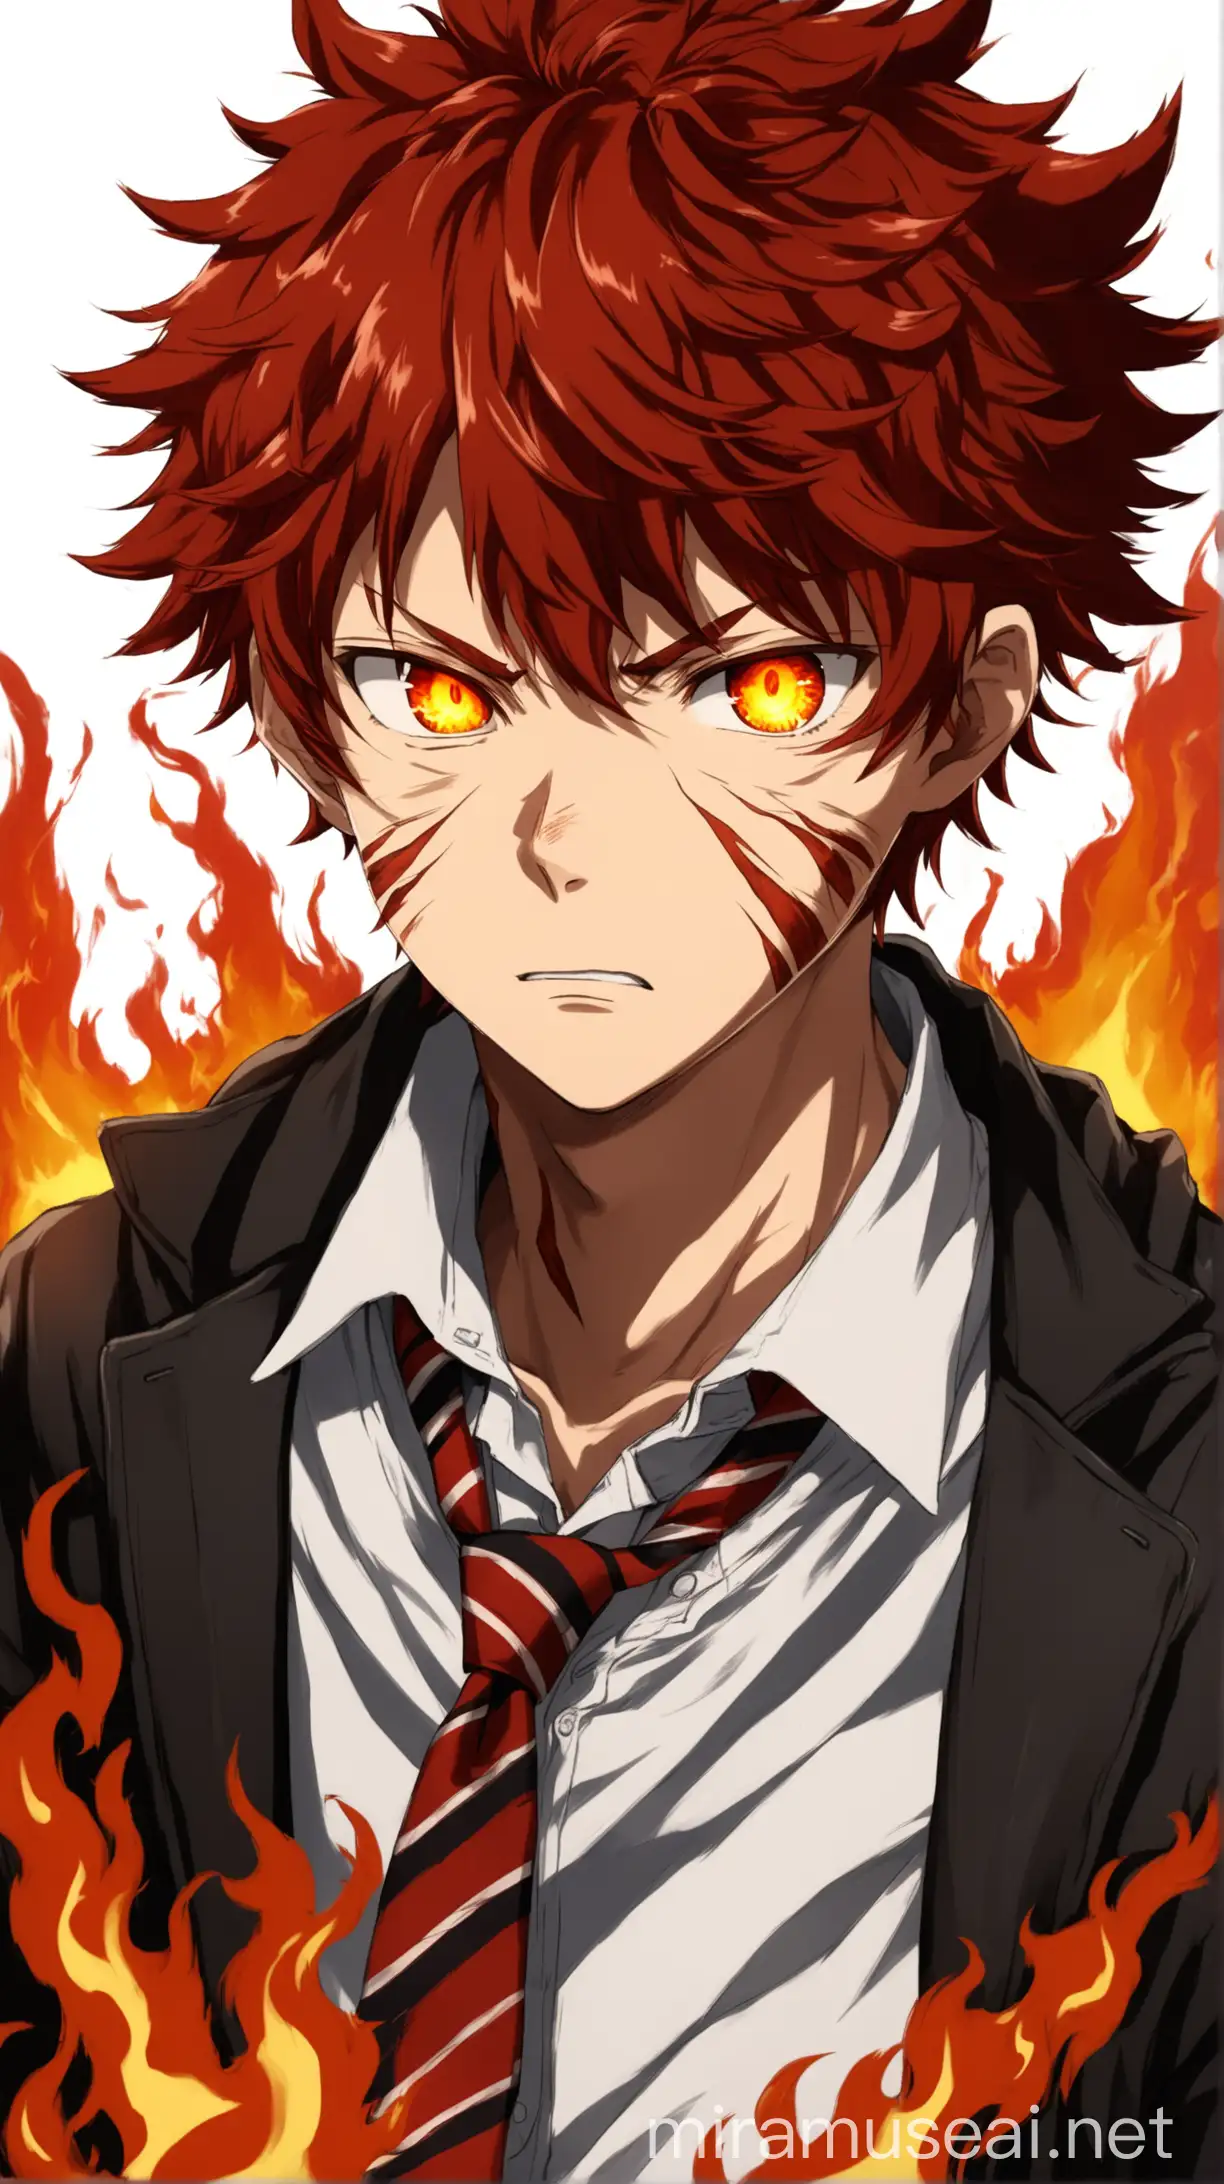 Anime Photo Session with a Fiery Teenage Boy in School Uniform